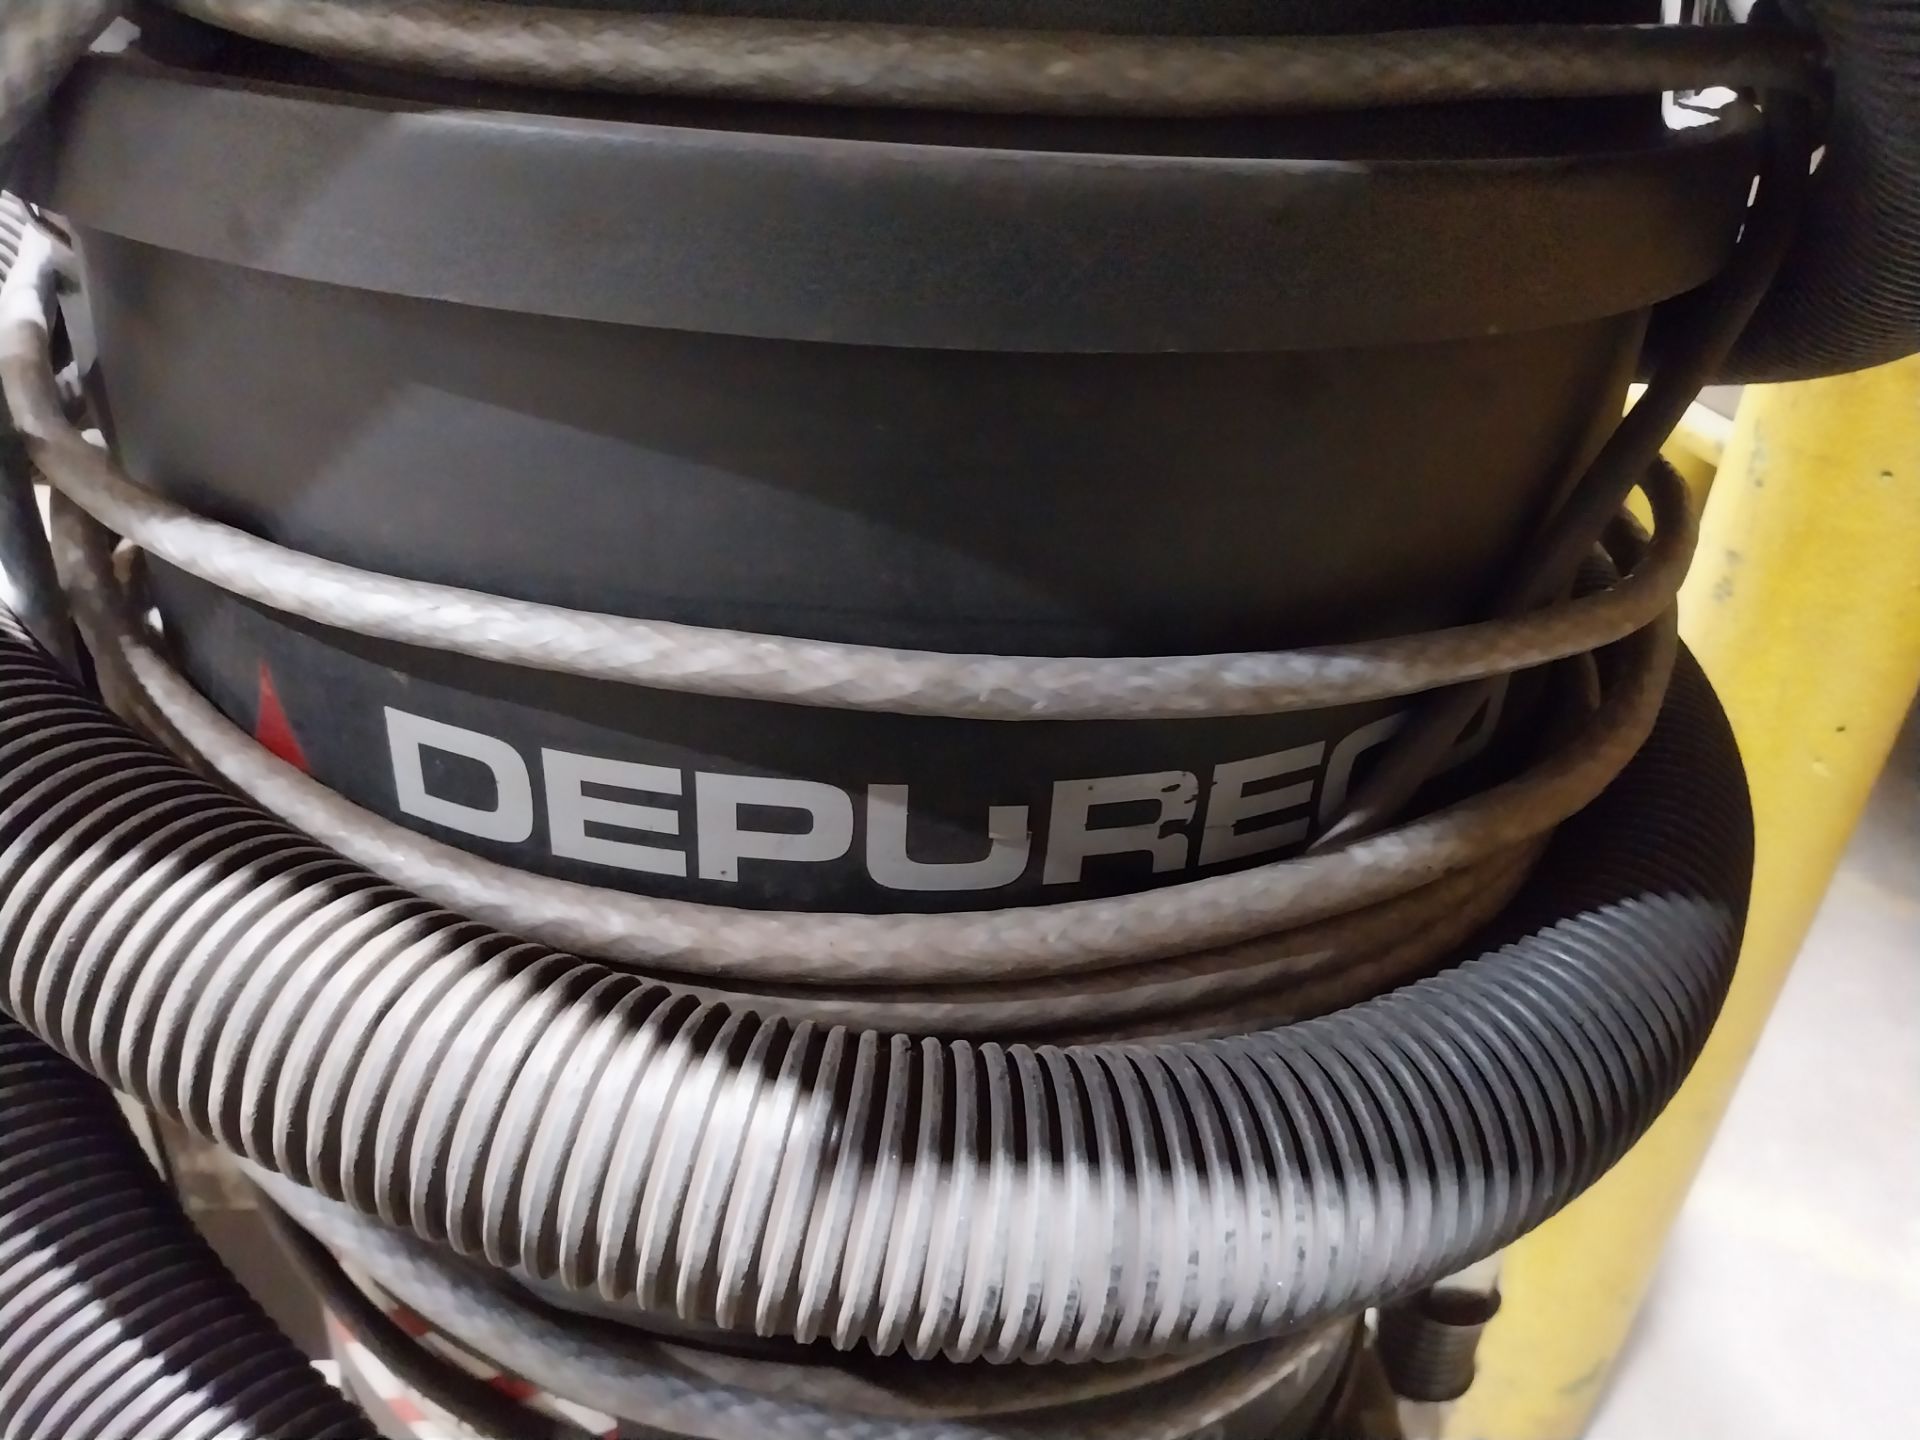 Depureco Ecobull 65 industrial vacuum cleaner 3 phase - Image 4 of 6